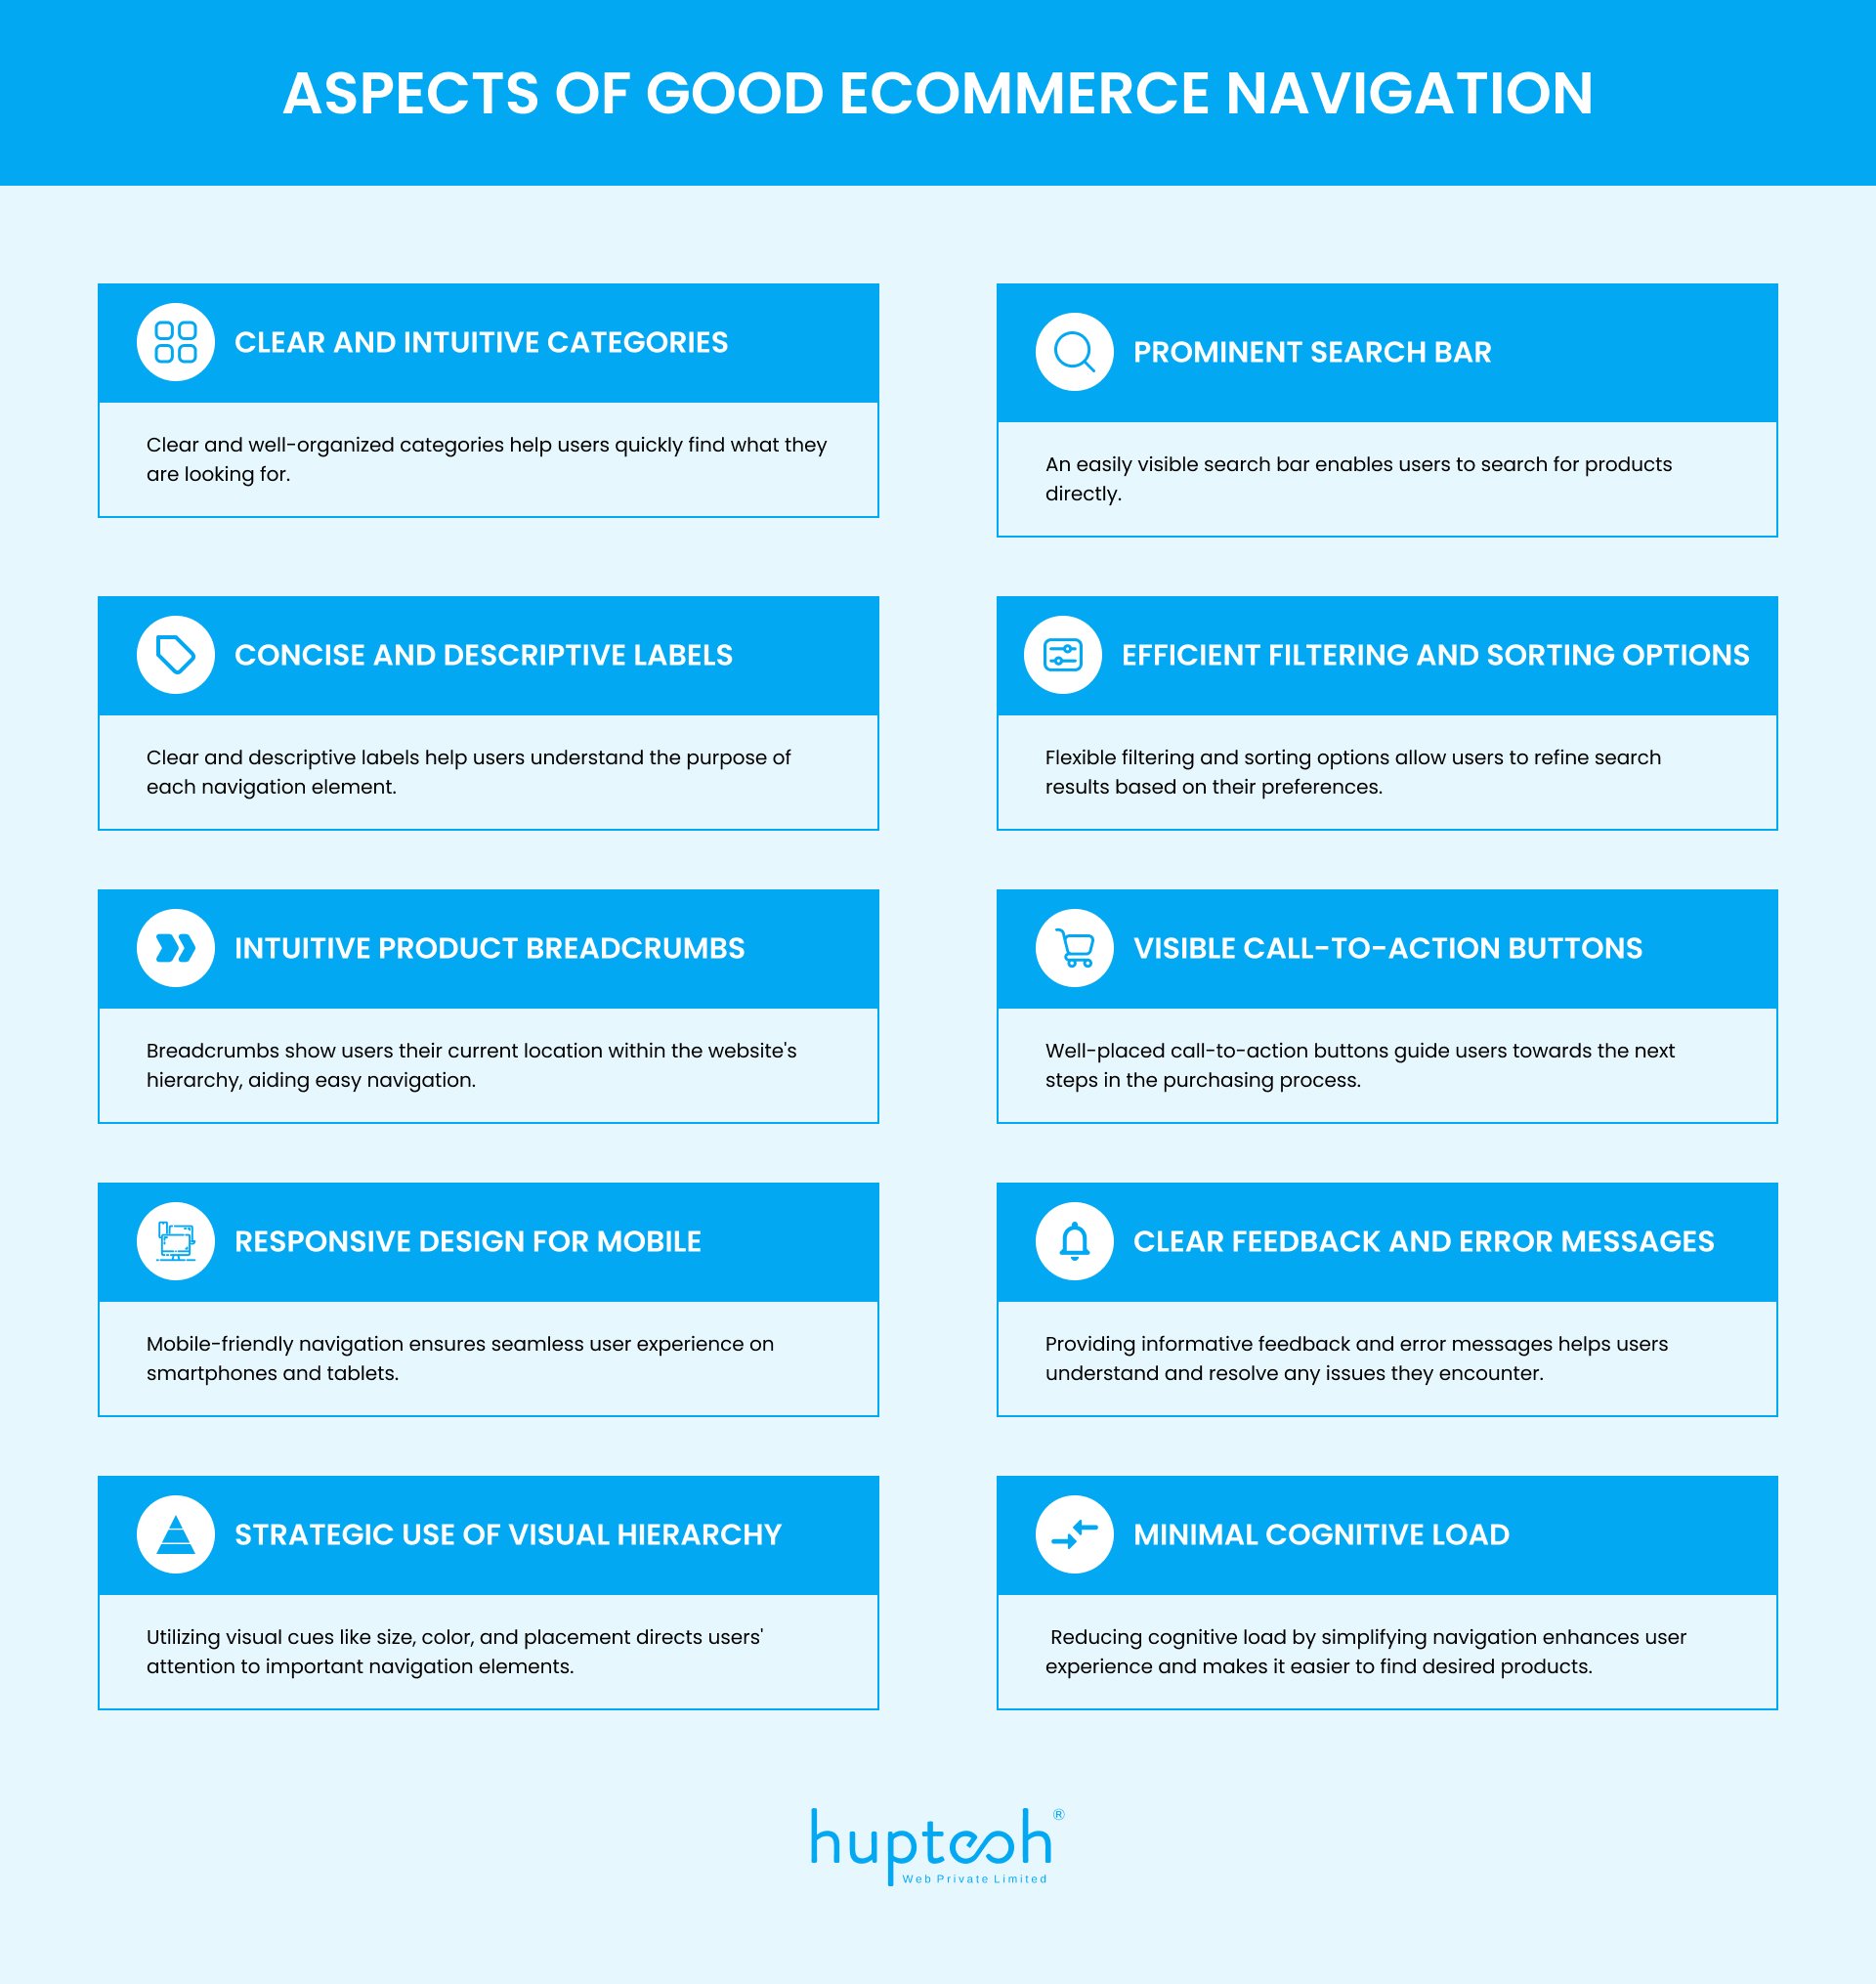 Aspects of Good eCommerce Navigation